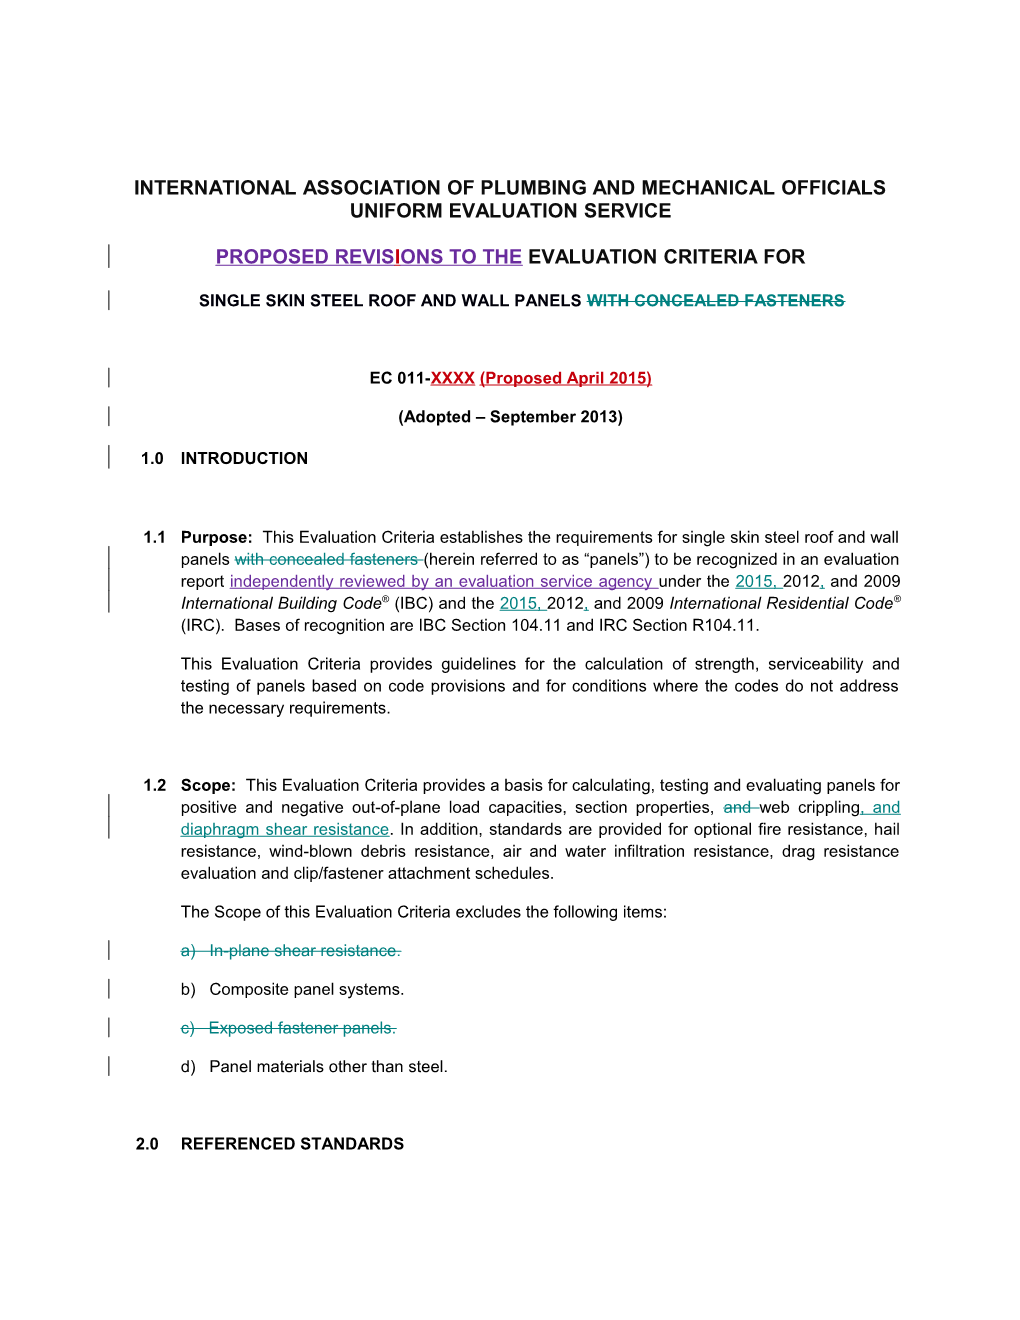 International Association of Plumbing and Mechanical Officials Uniform Evaluation Service